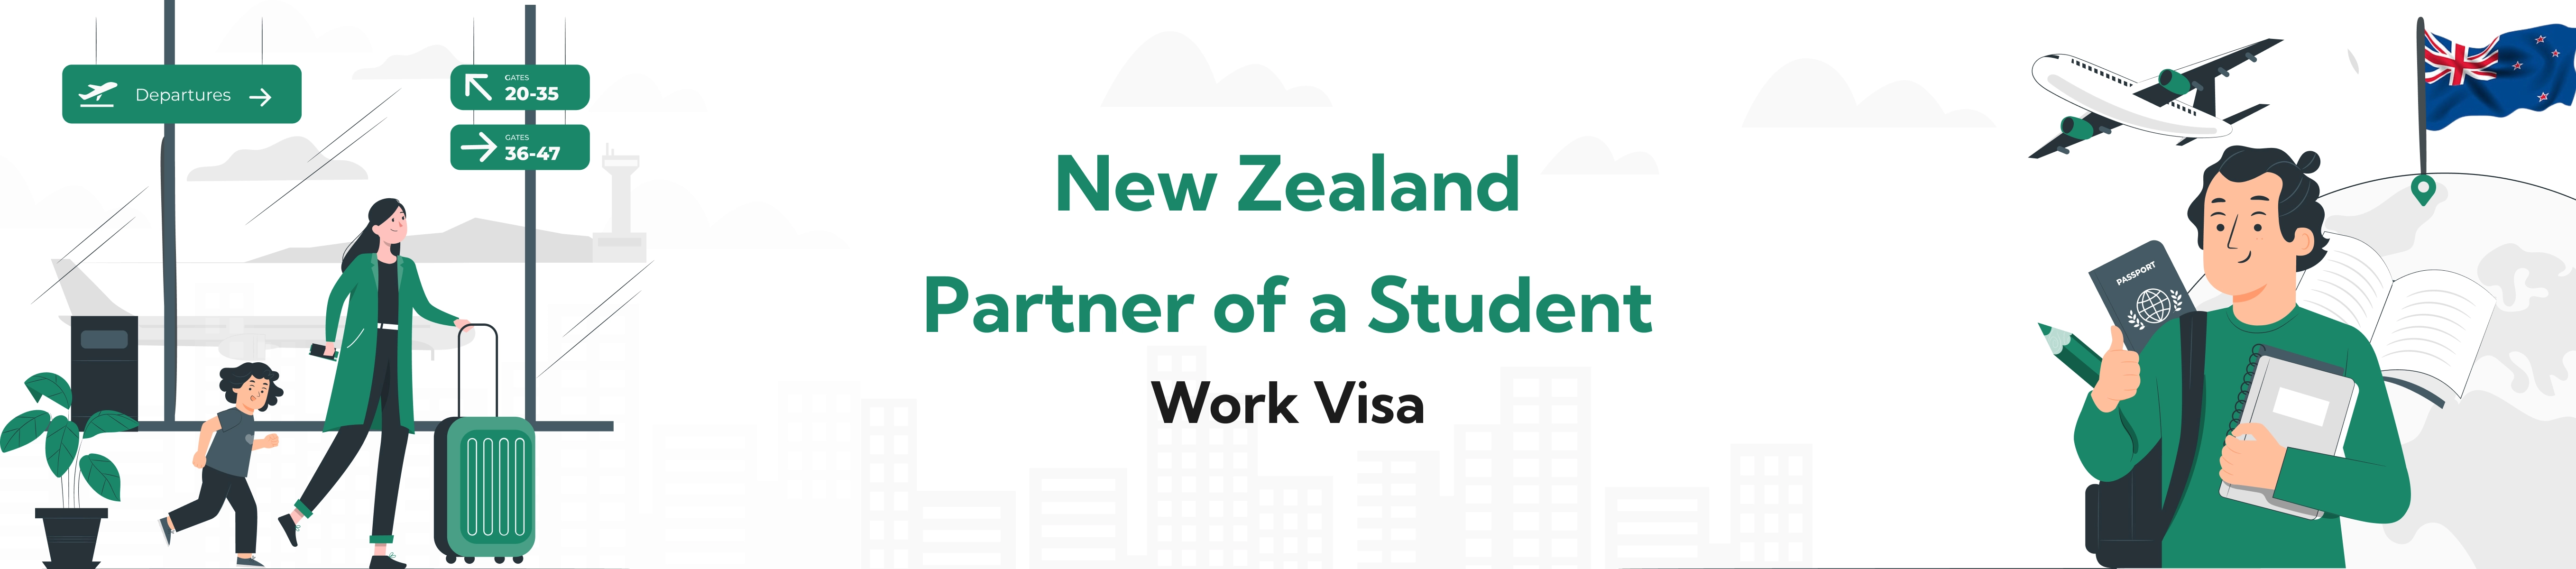 New Zealand Partner of a Student Work Visa